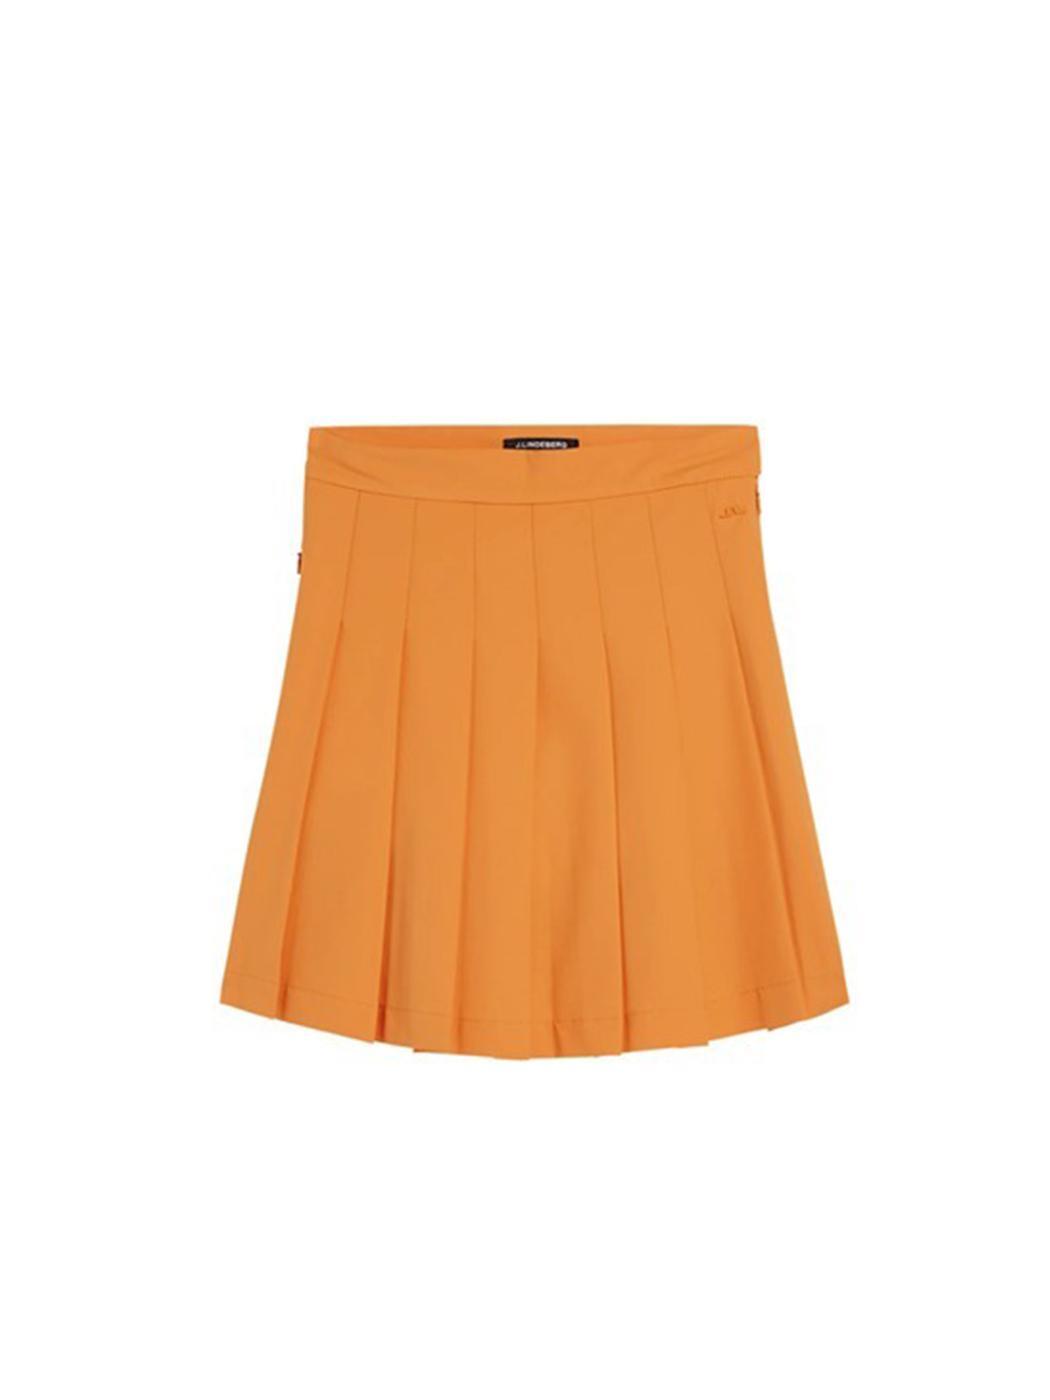 Jay Lindberg SS Adina Golf Skirt Orange